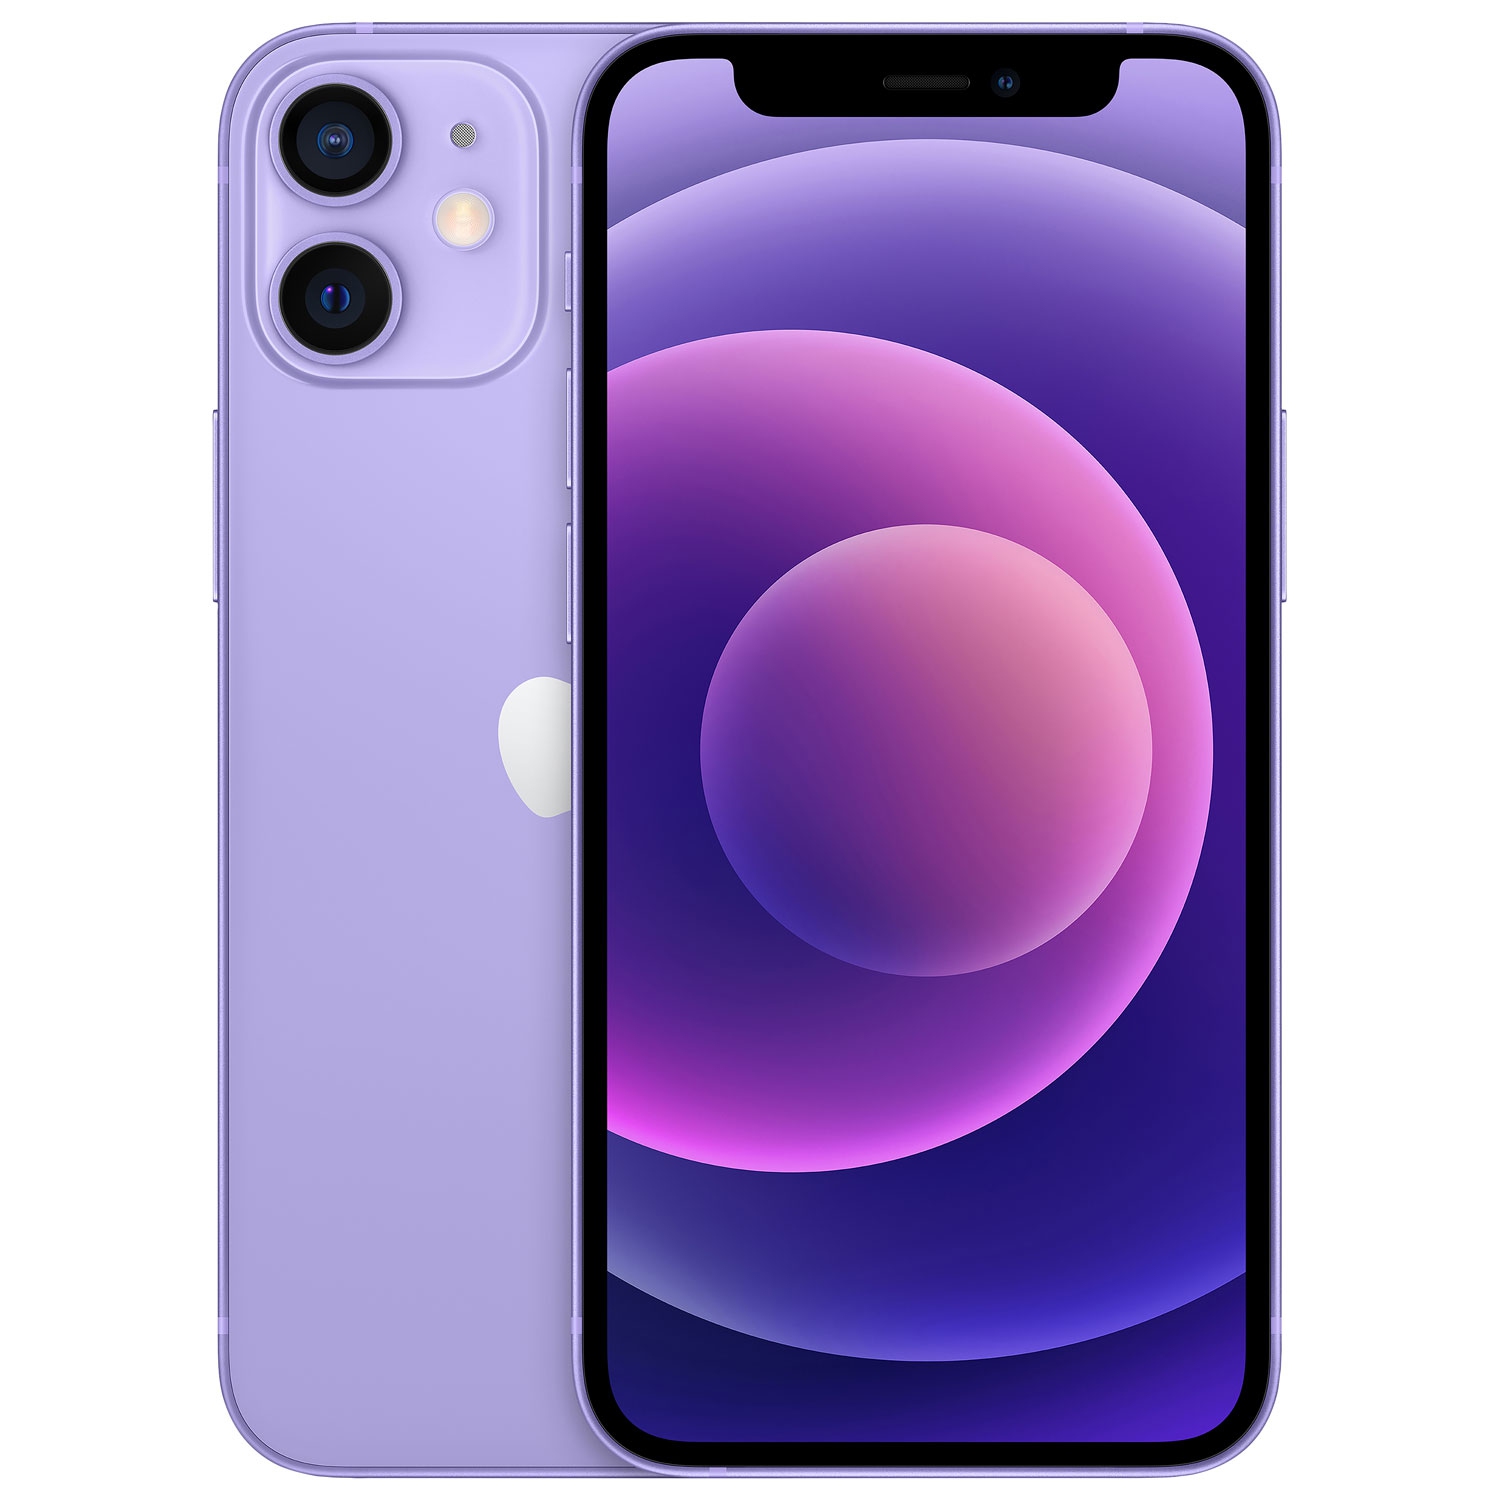 Apple iPhone 12 mini 64GB - Purple - Unlocked - Open Box